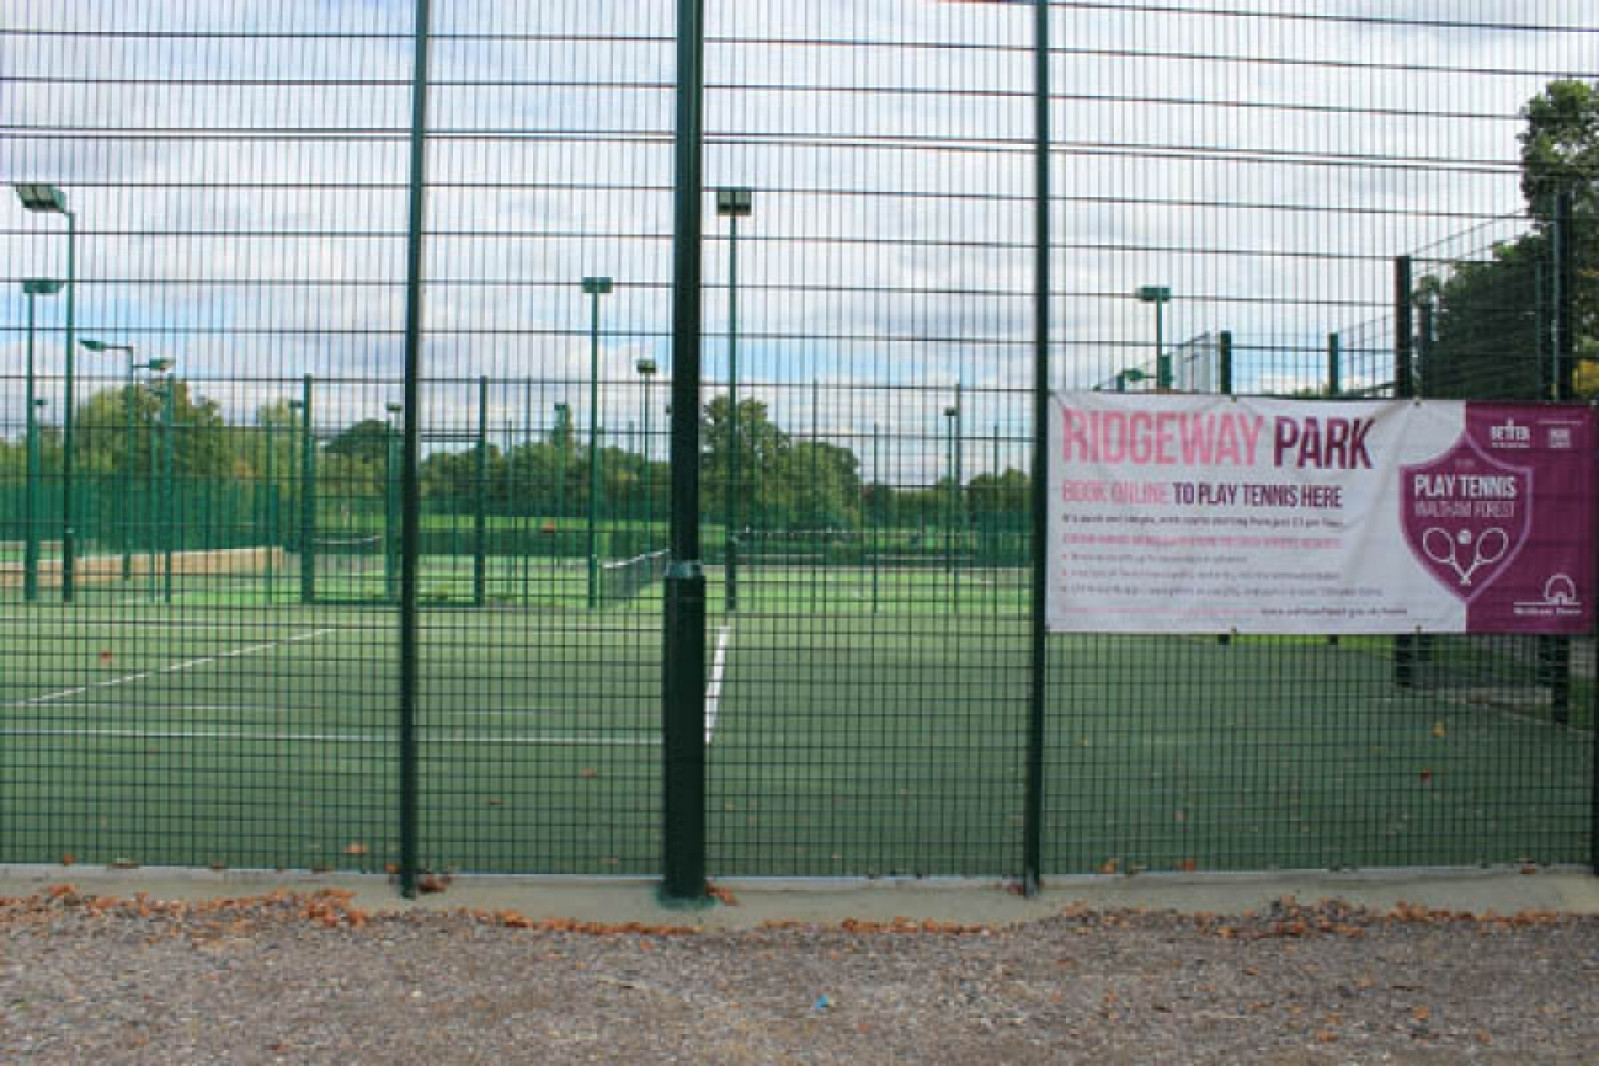 Essex council serves up tennis drive